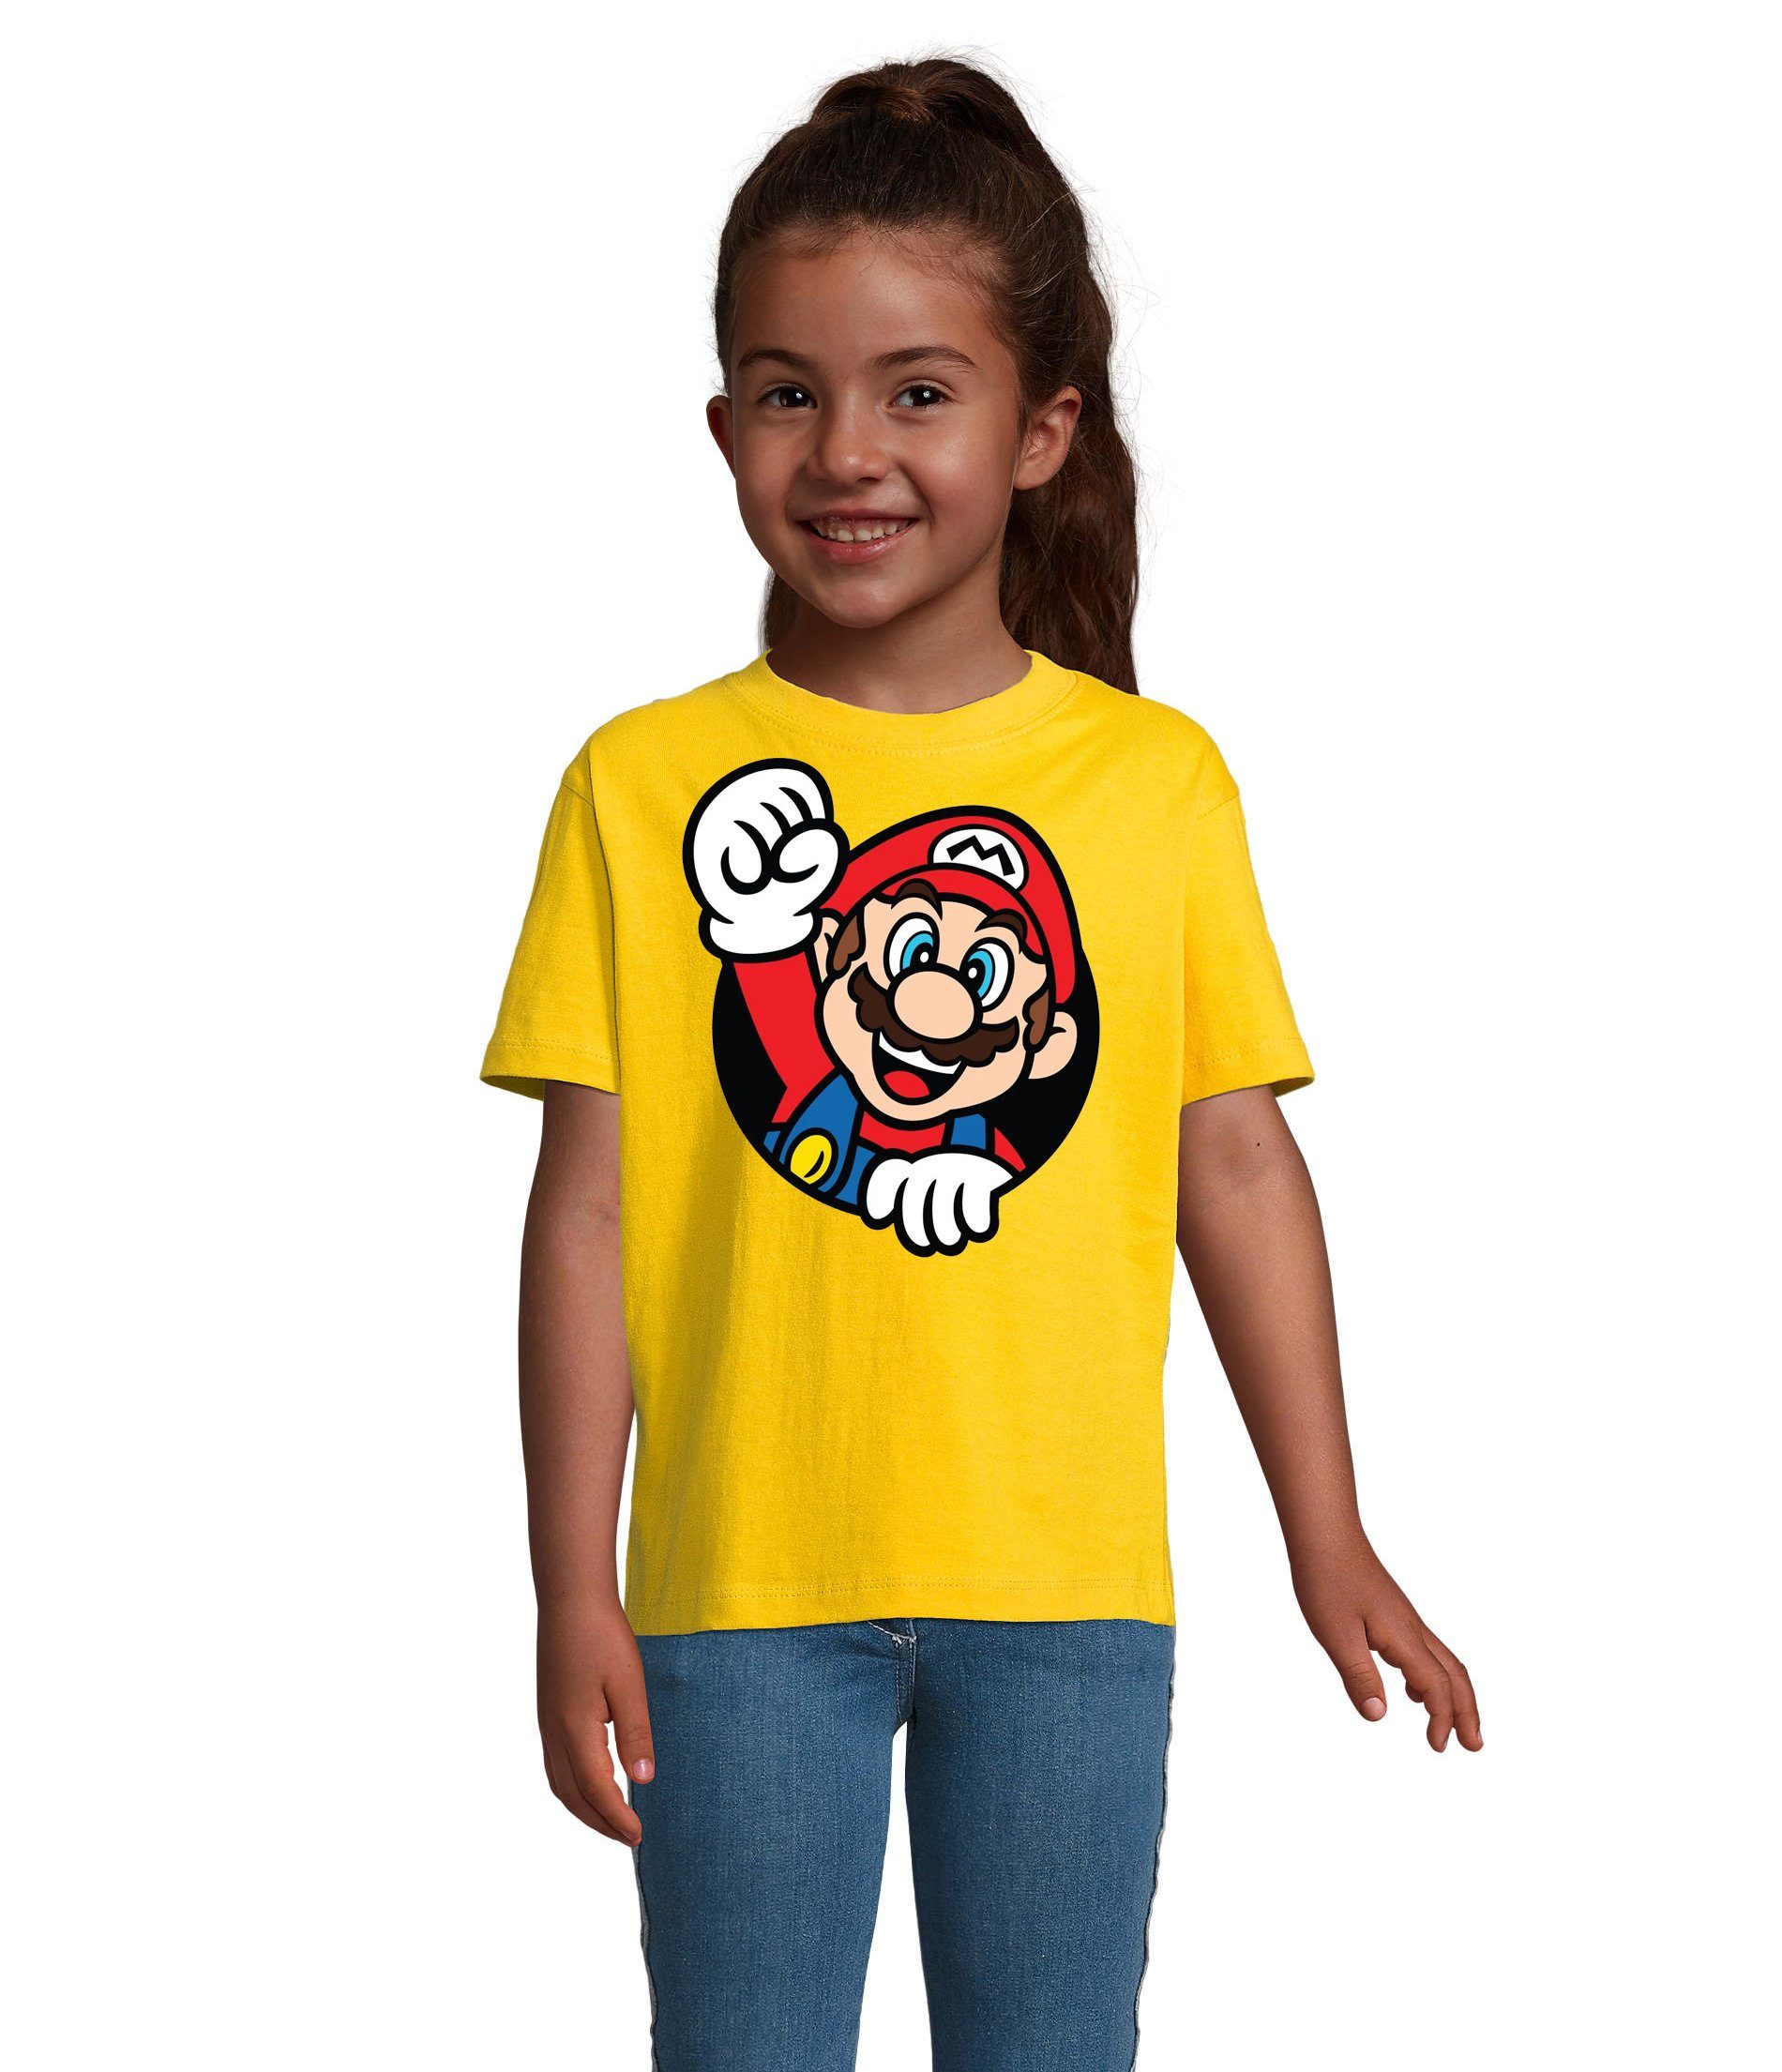 Super Faust Brownie Kinder Nintendo Nerd Mario Konsole Spiel Blondie Gaming & T-Shirt Konsole Gelb